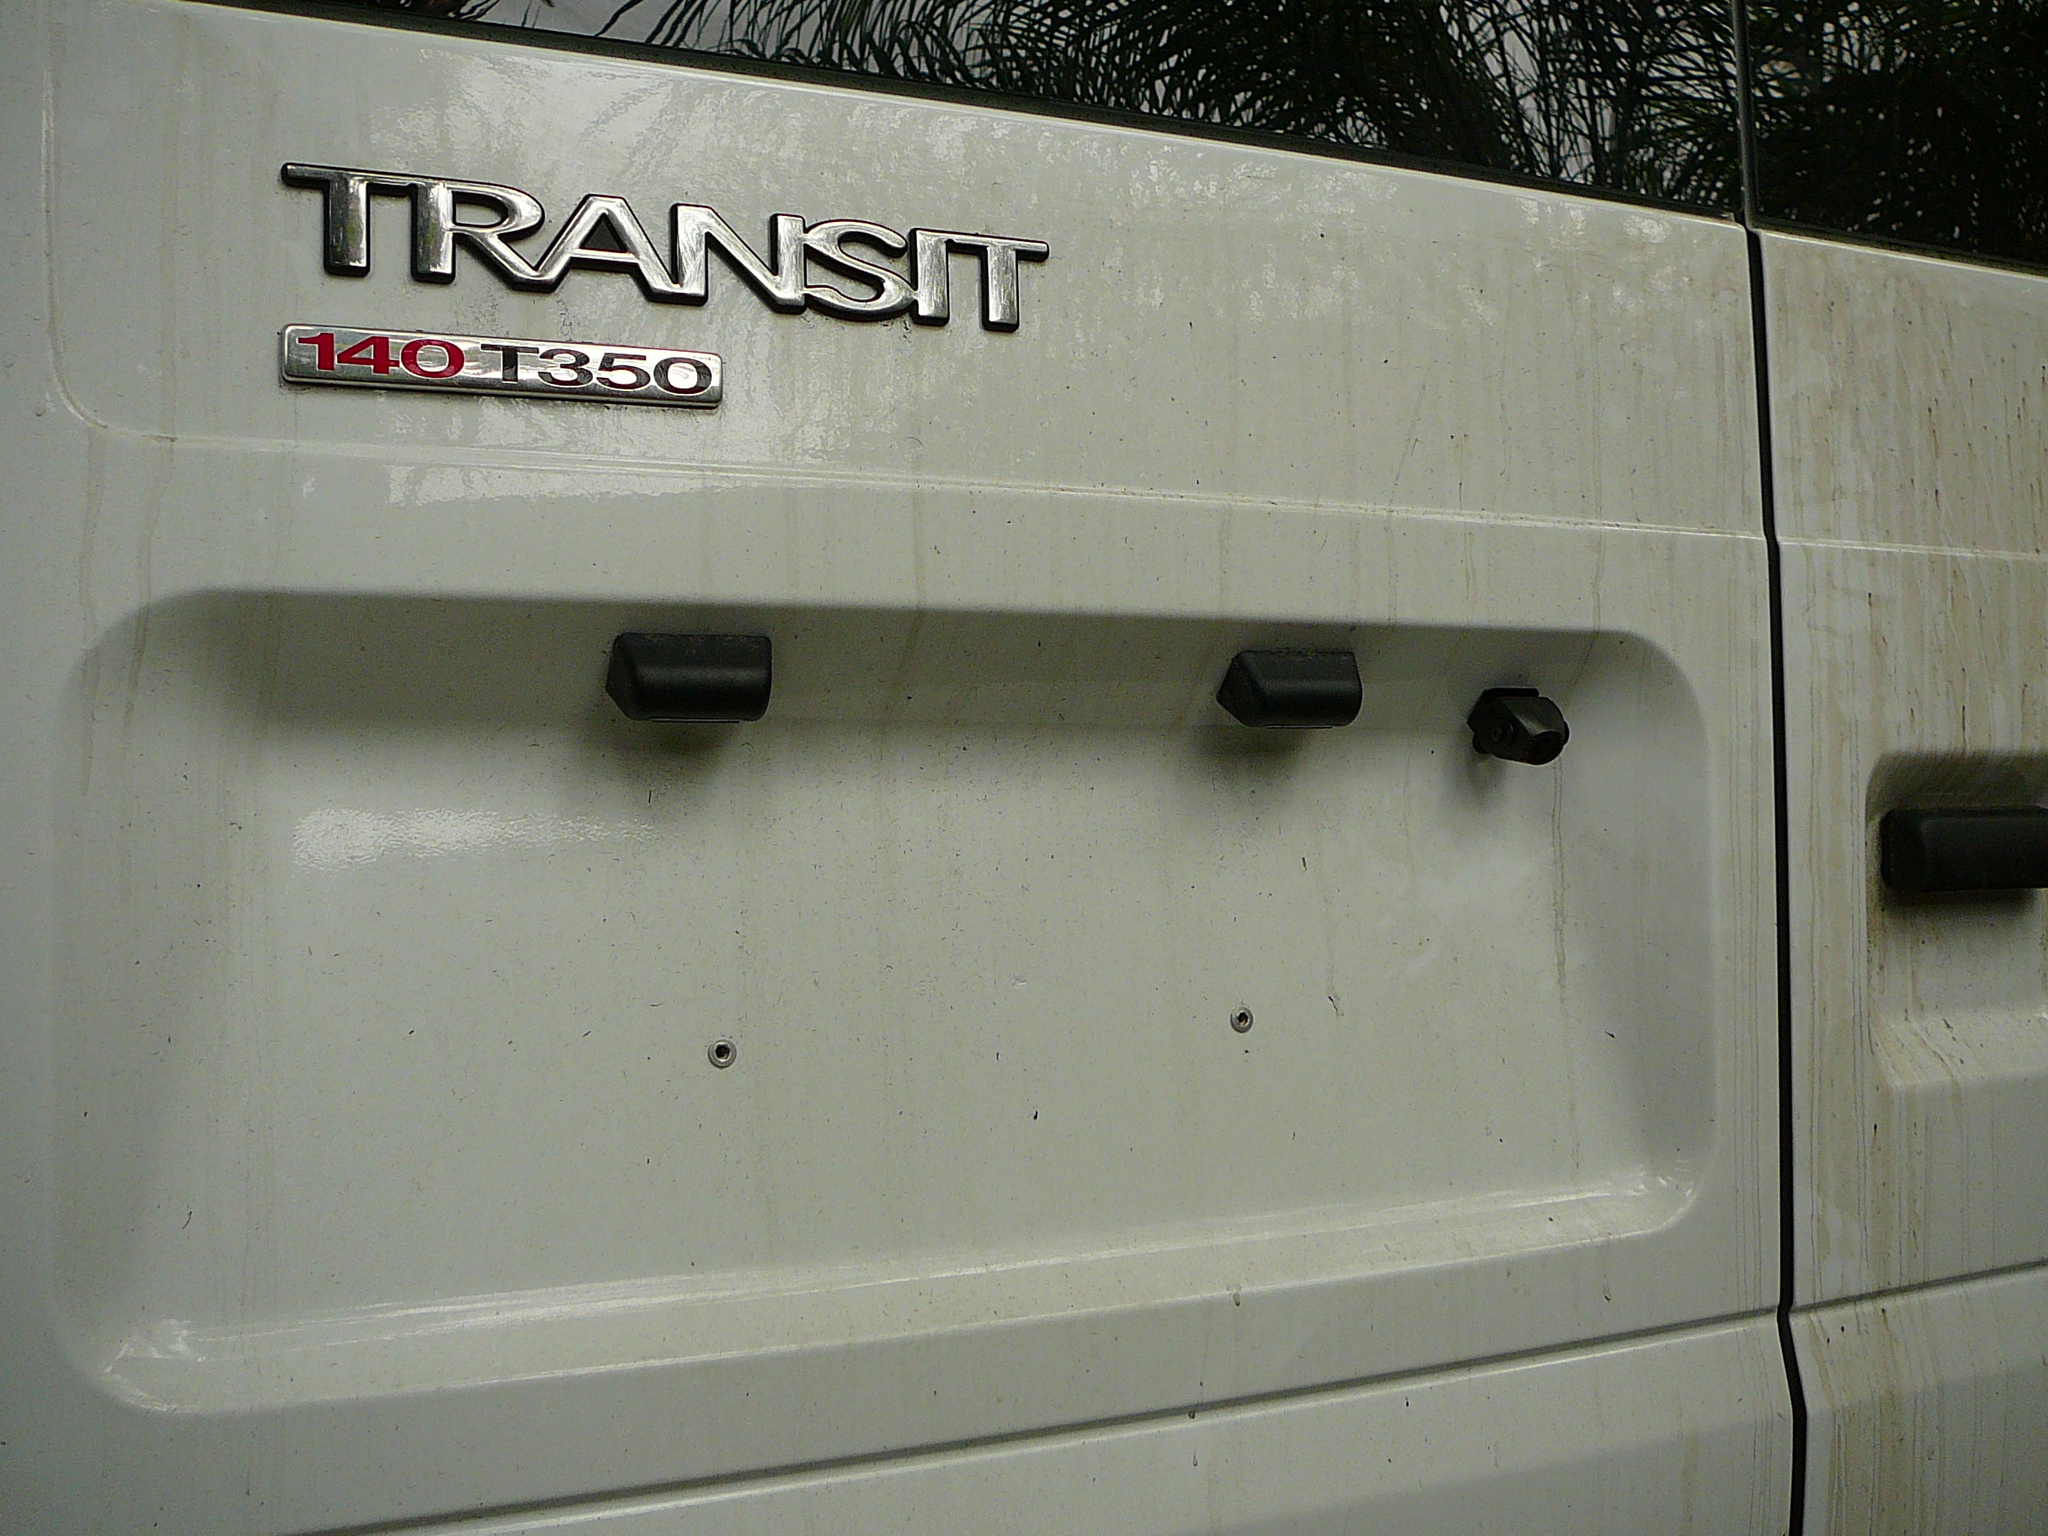 Ford Transit 2011, Pioneer AVH-P3350BT and reverse camera